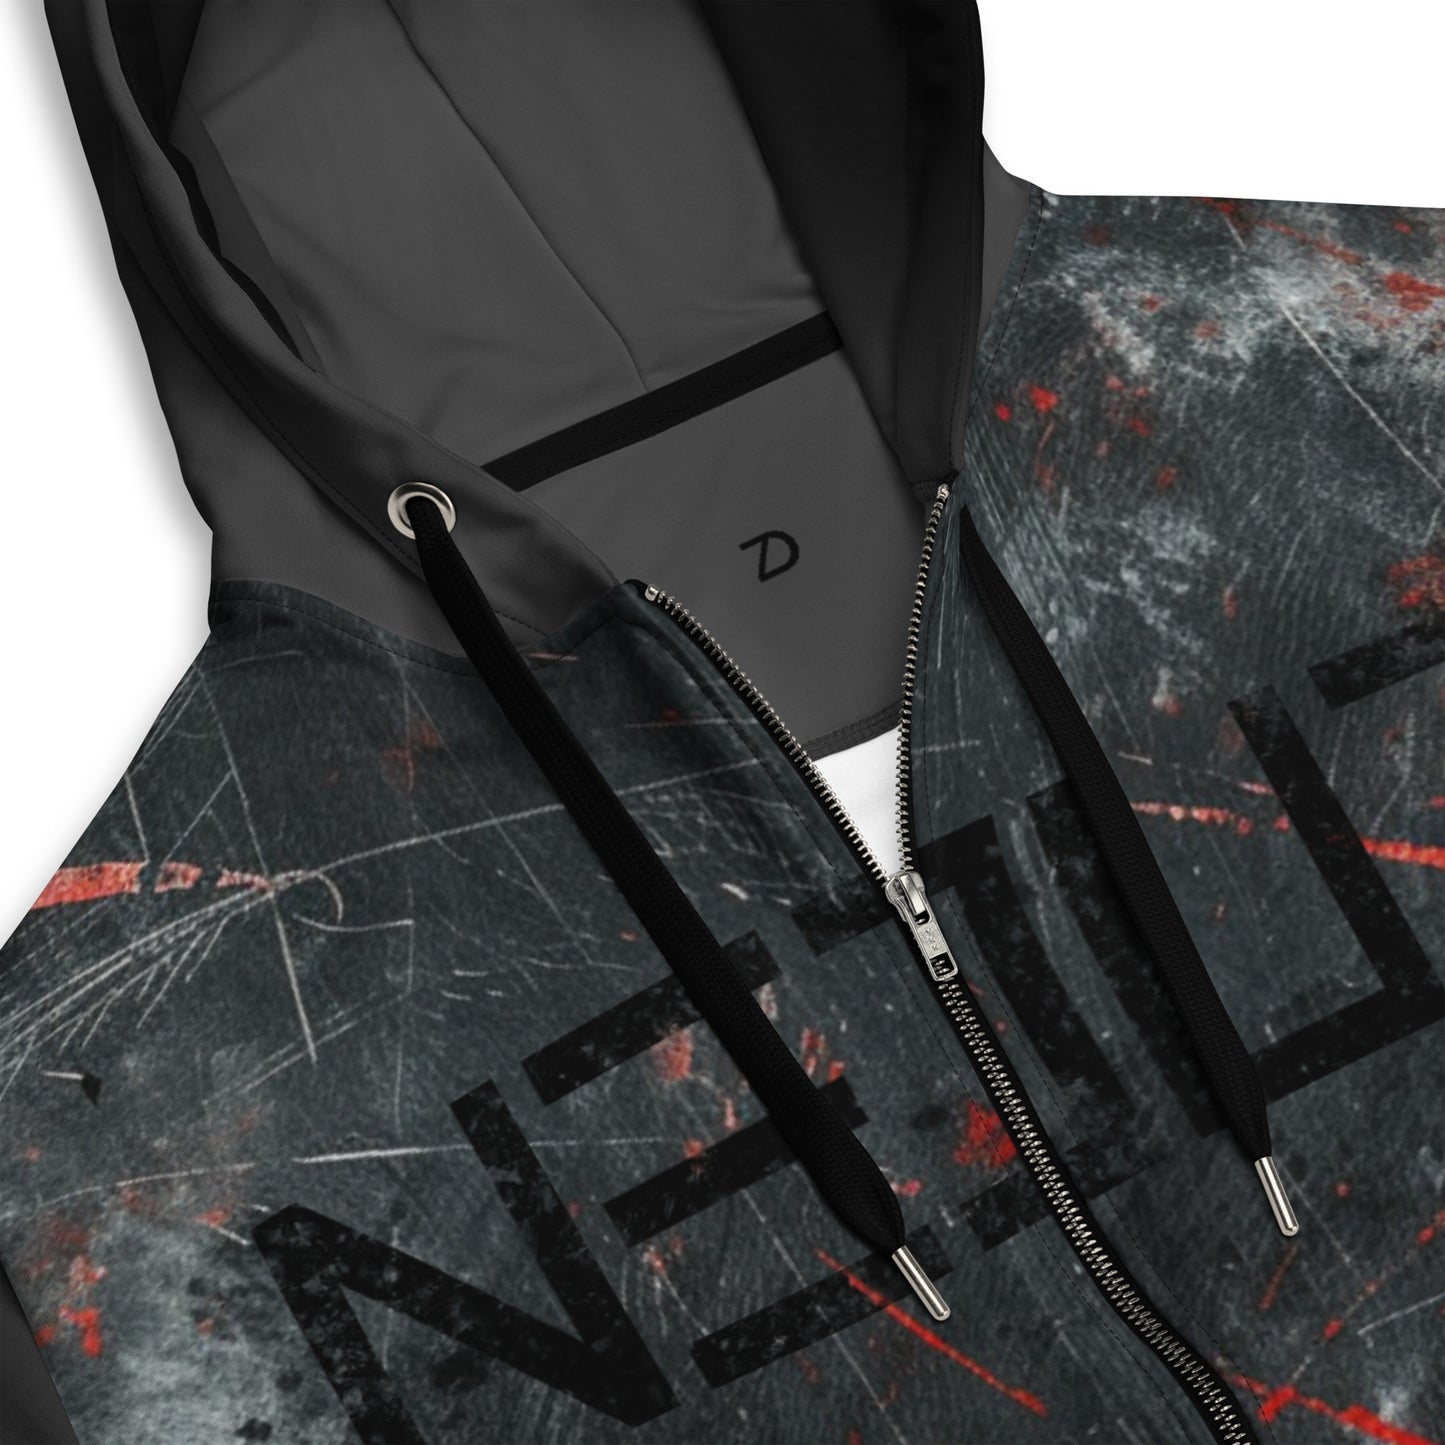 Neduz Merch Crimson Grunge Unisex Recycled Zip Hoodie - Sustainable Comfort & Style